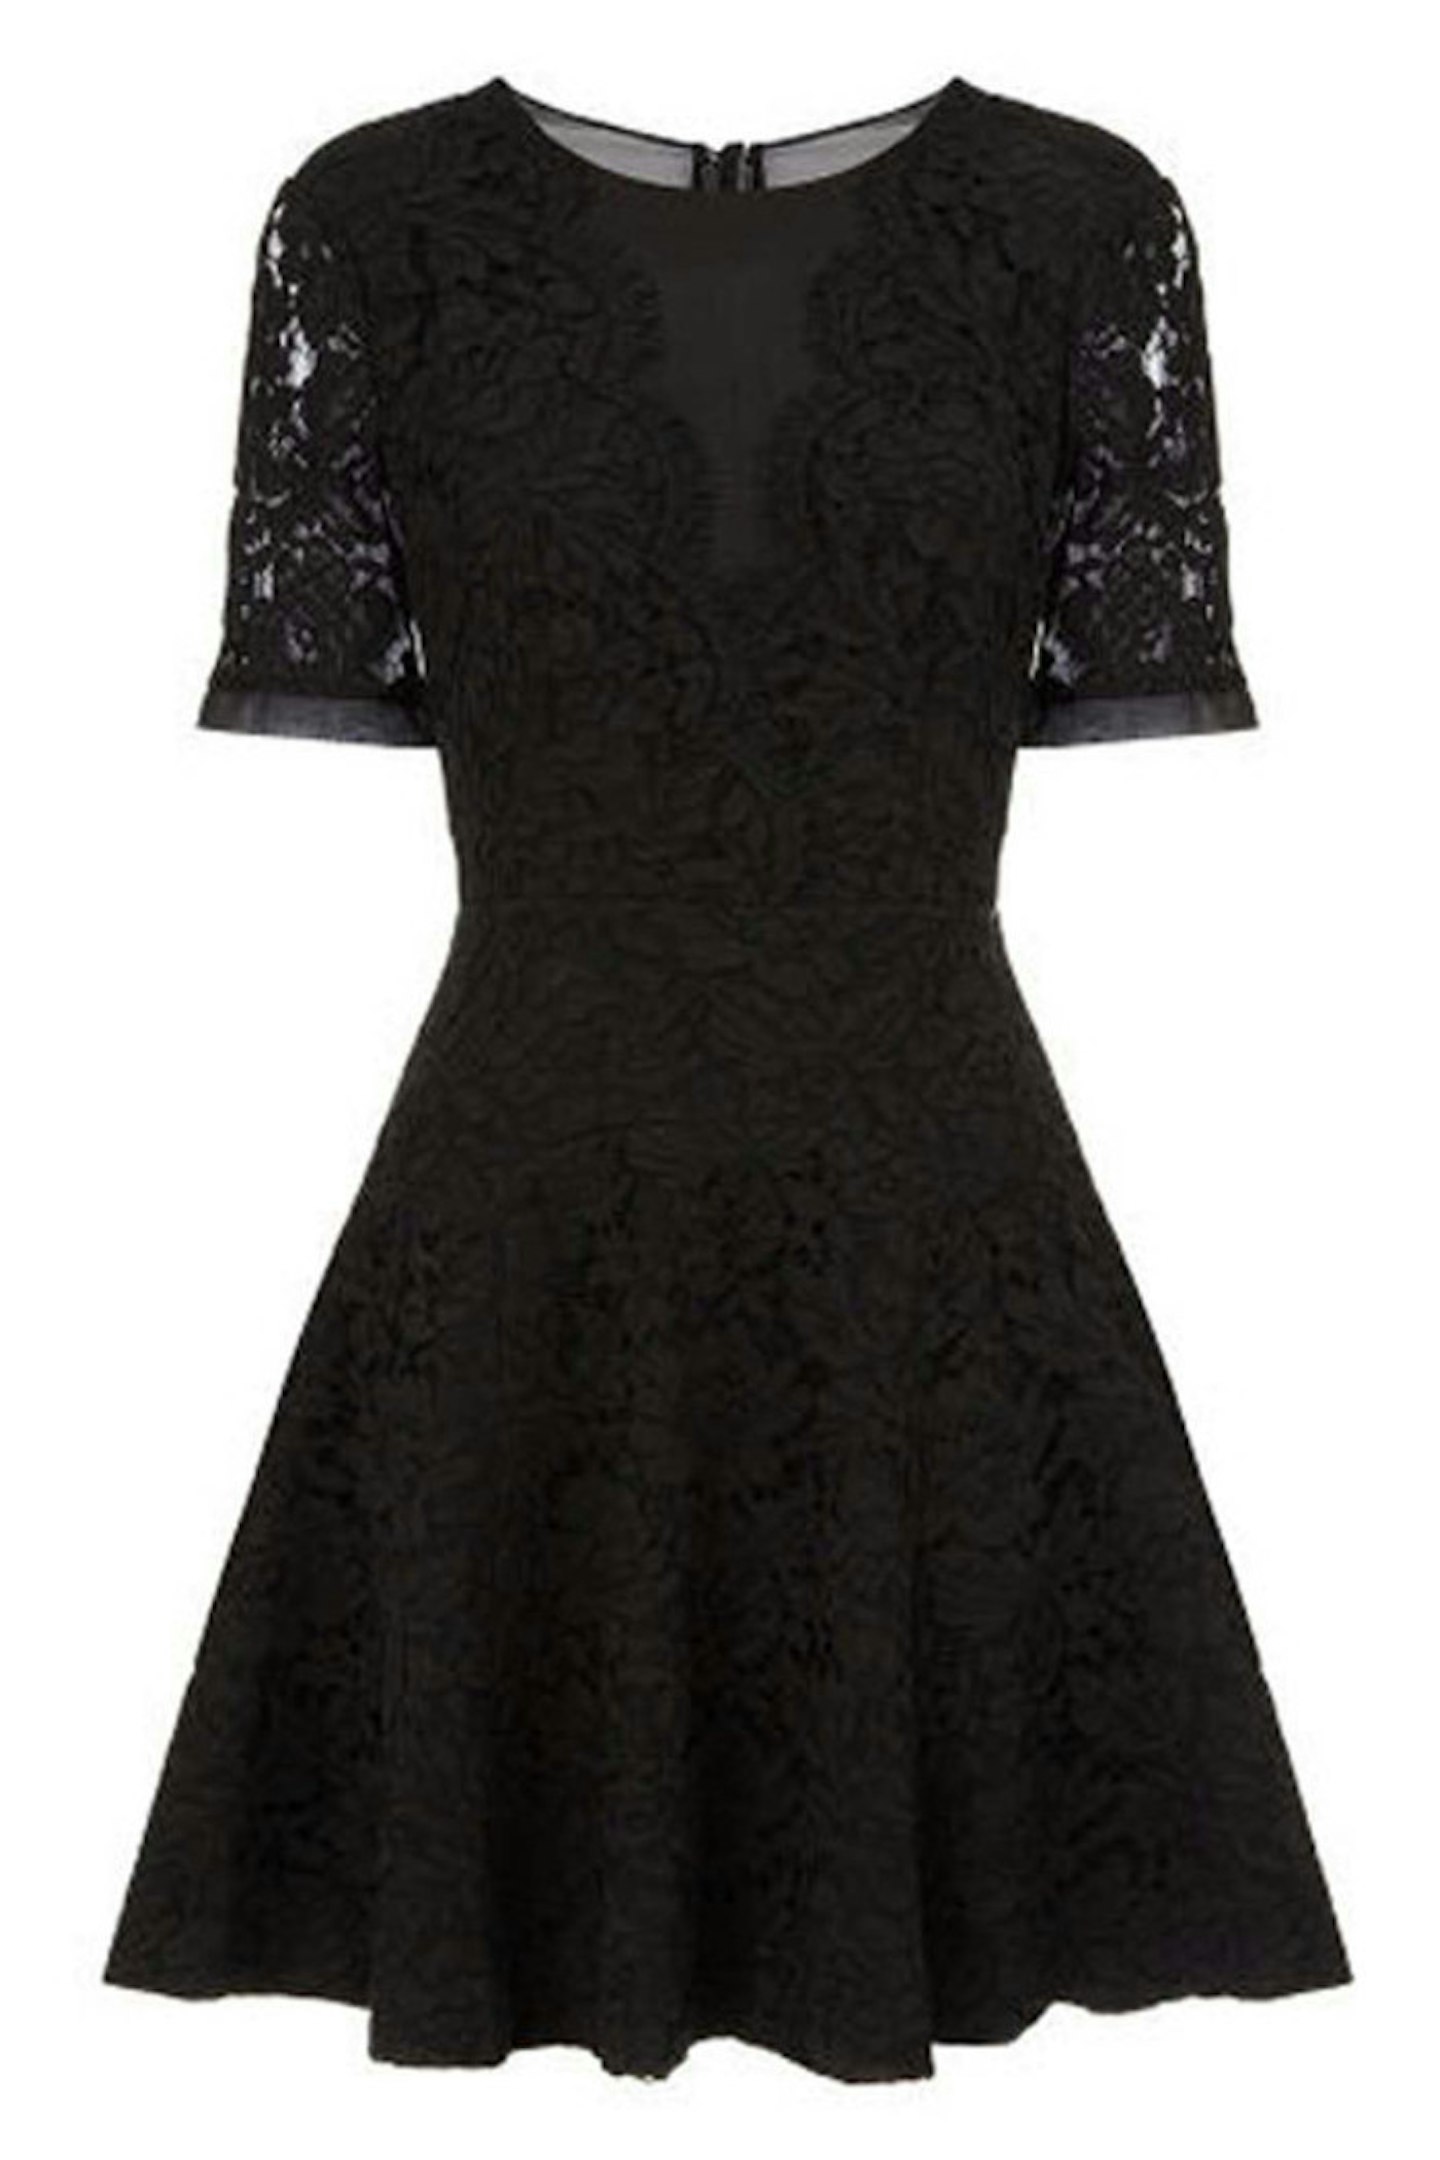 Black lace dress, £225, Whistles